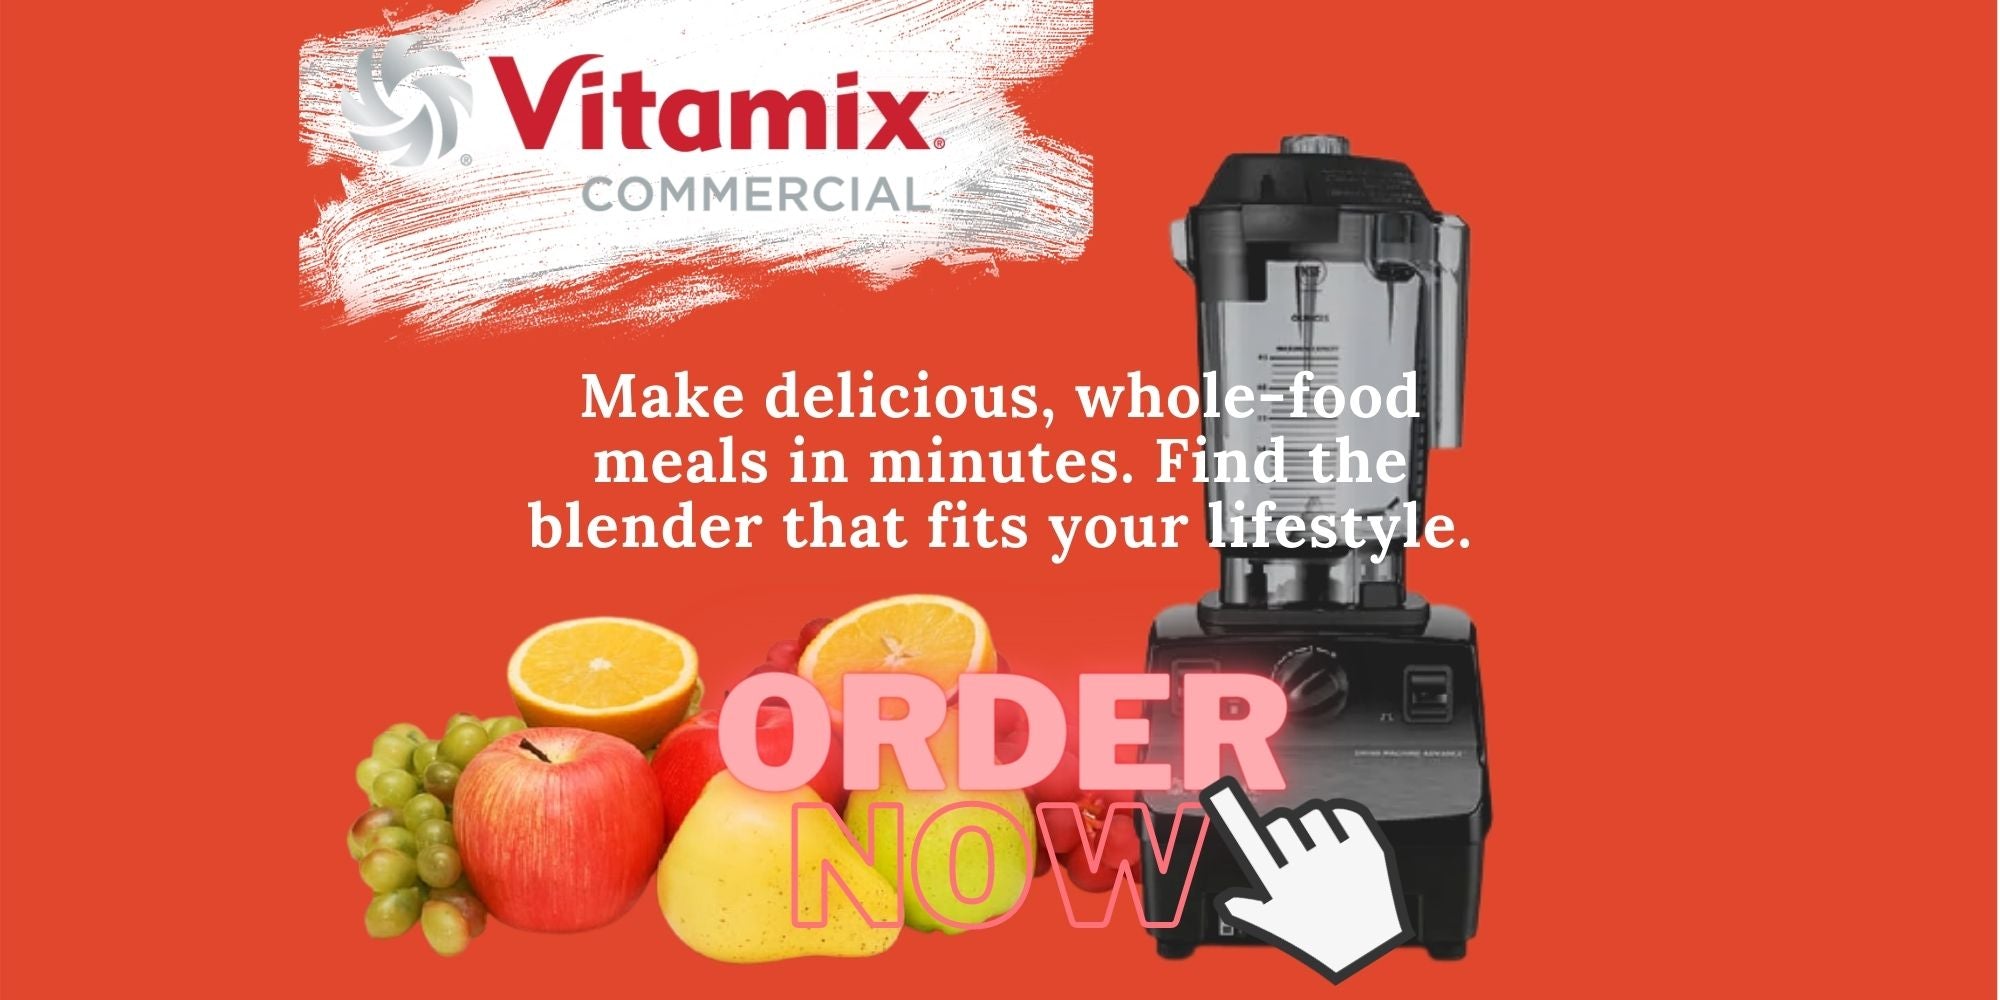 Vitamix commercial